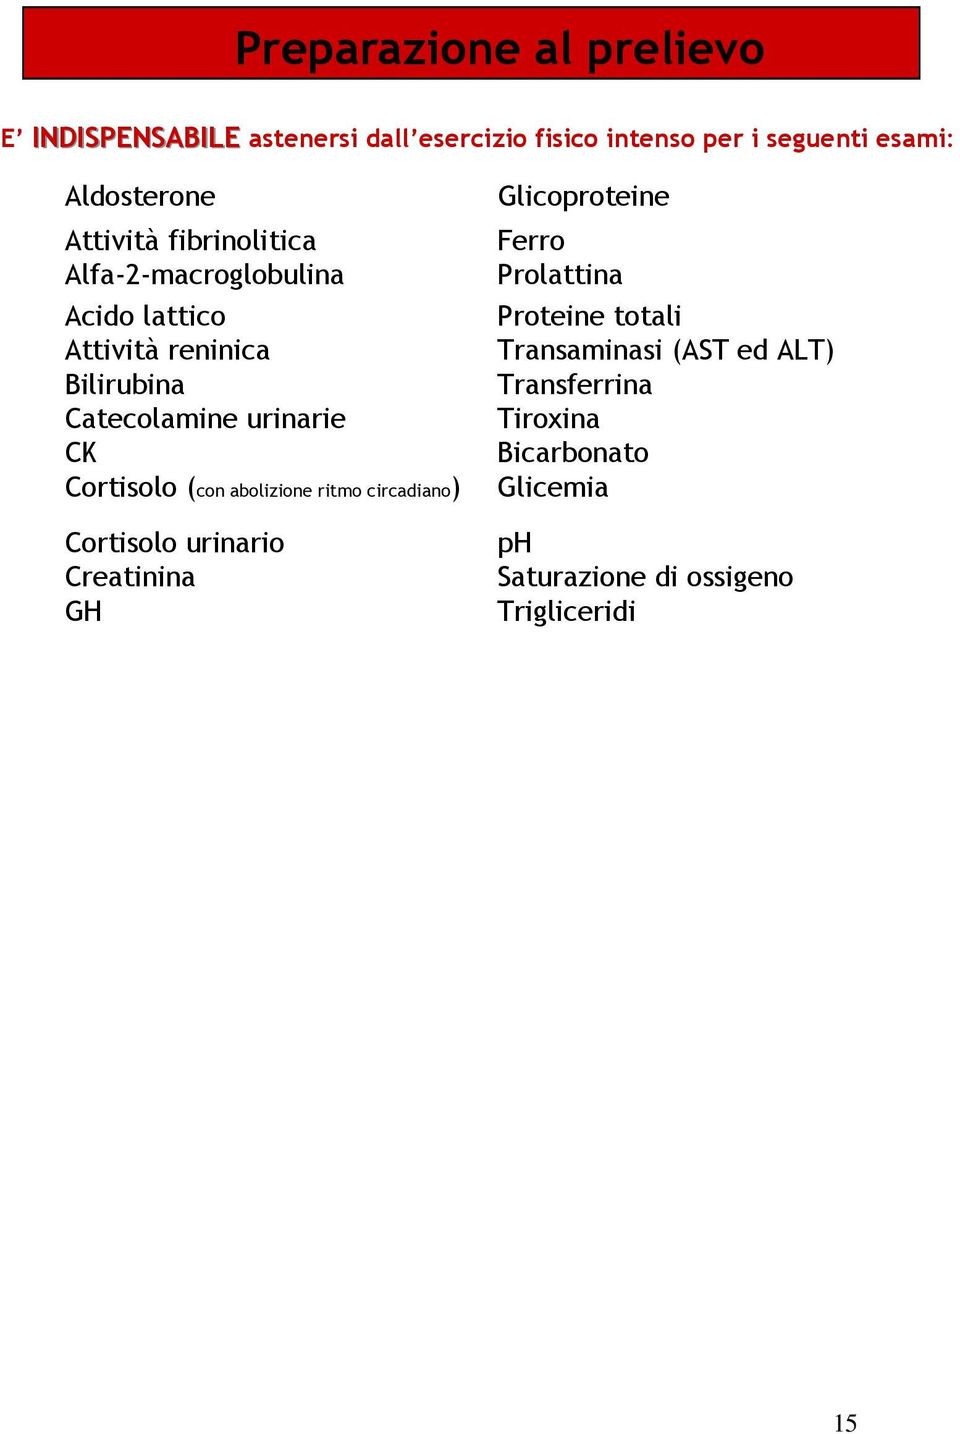 Attività reninica Transaminasi (AST ed ALT) Bilirubina Transferrina Catecolamine urinarie Tiroxina CK Bicarbonato